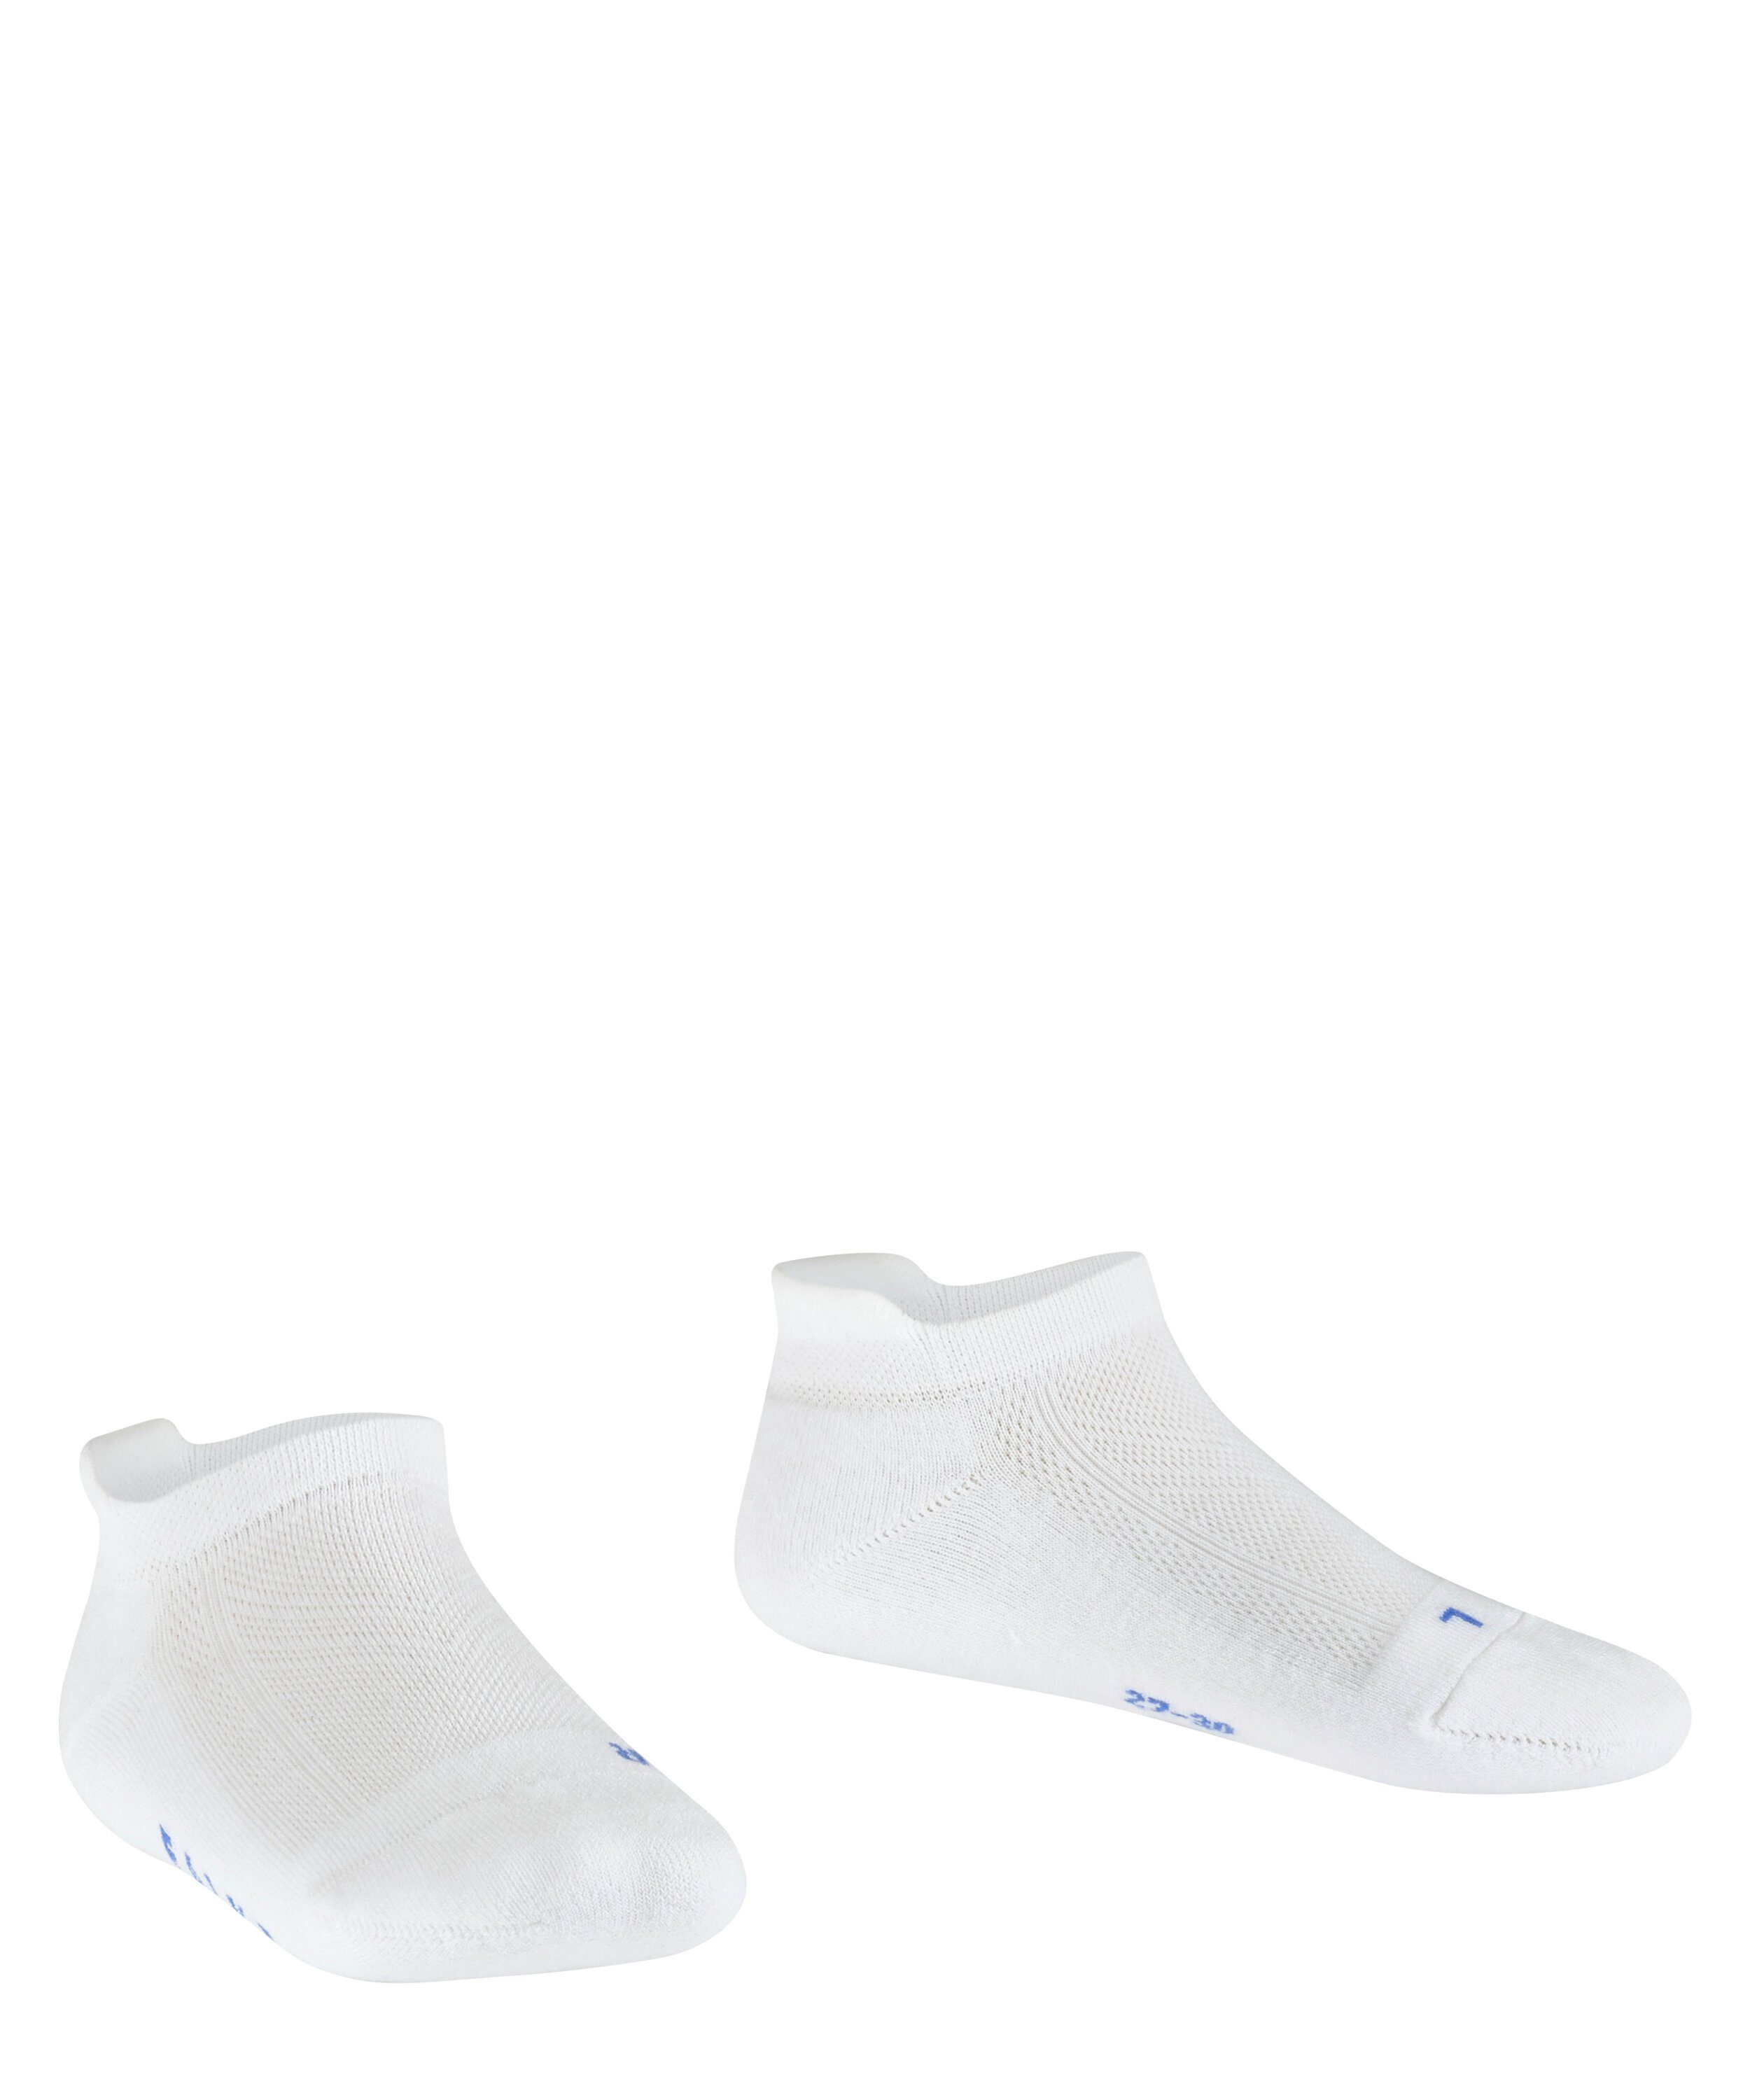 (2000) (1-Paar) mit Sneakersocken FALKE ultraleichter Kick Cool white Polsterung